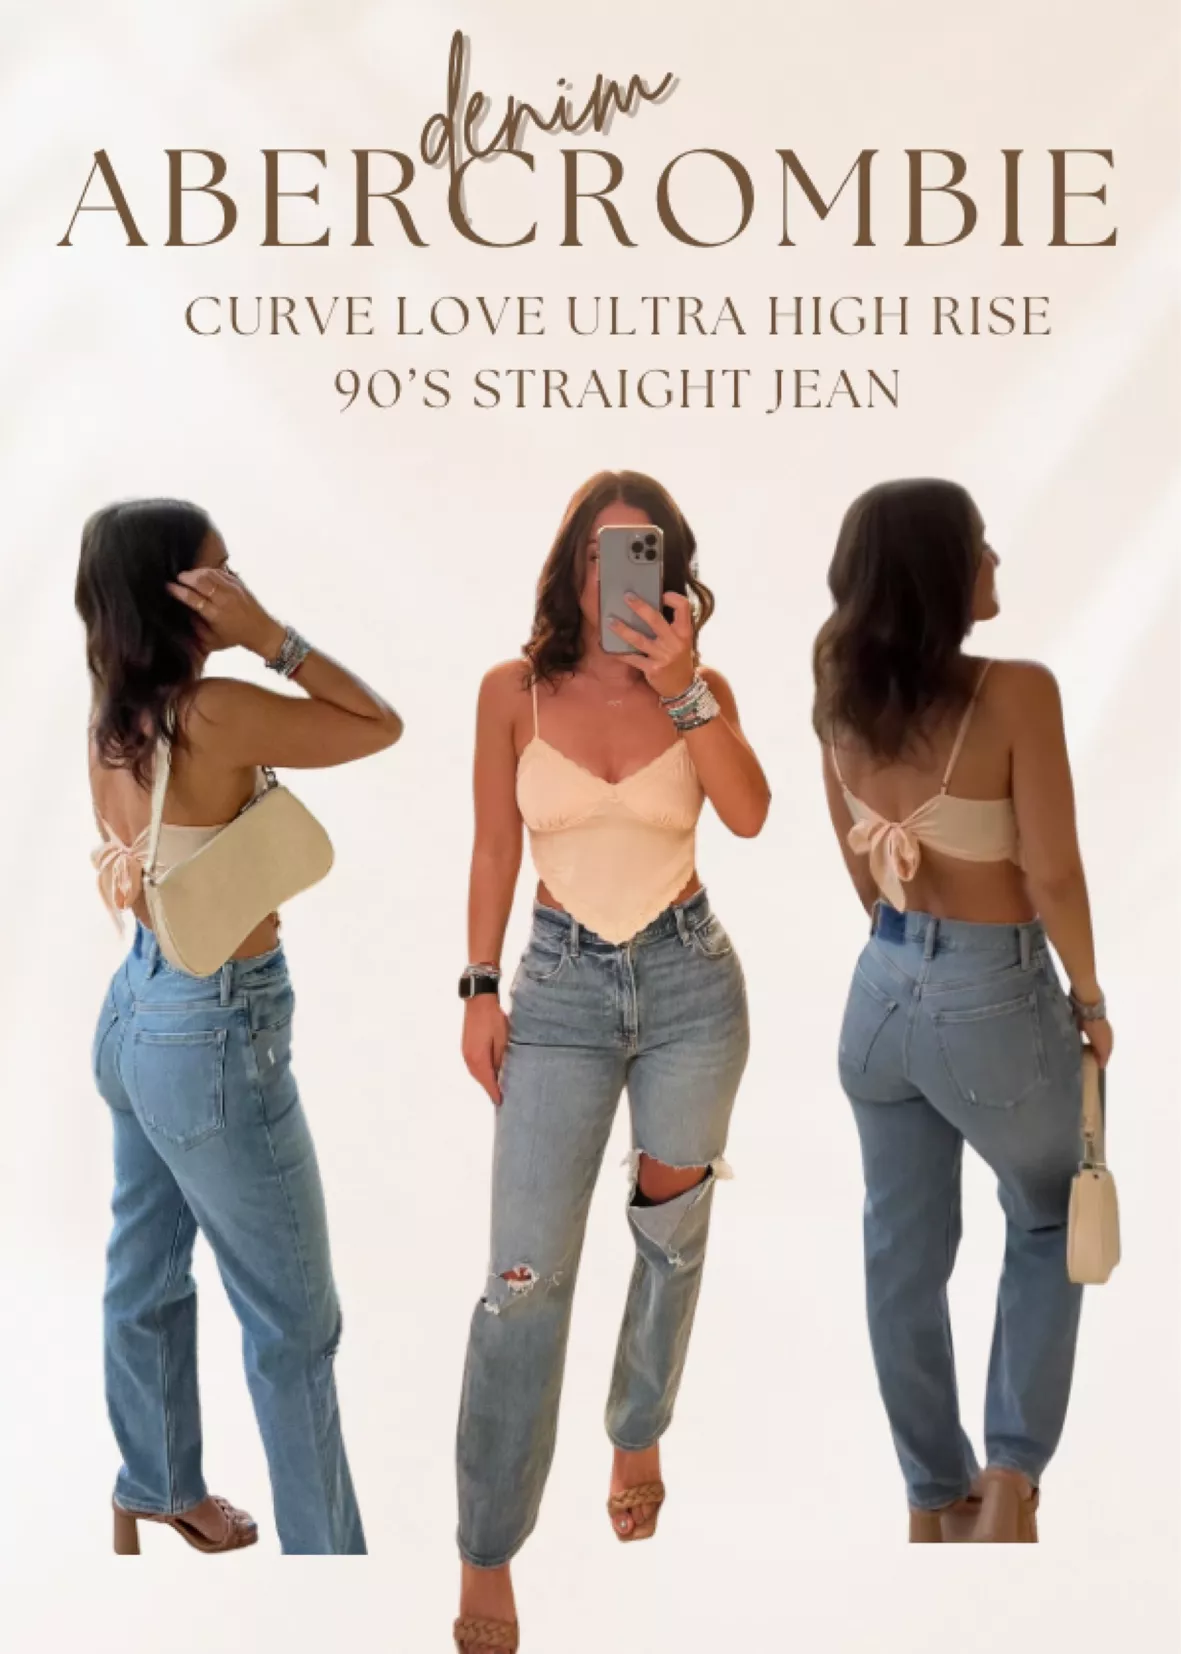 Women's Curve Love Ultra High Rise 90s Straight Jean, Women's Clearance